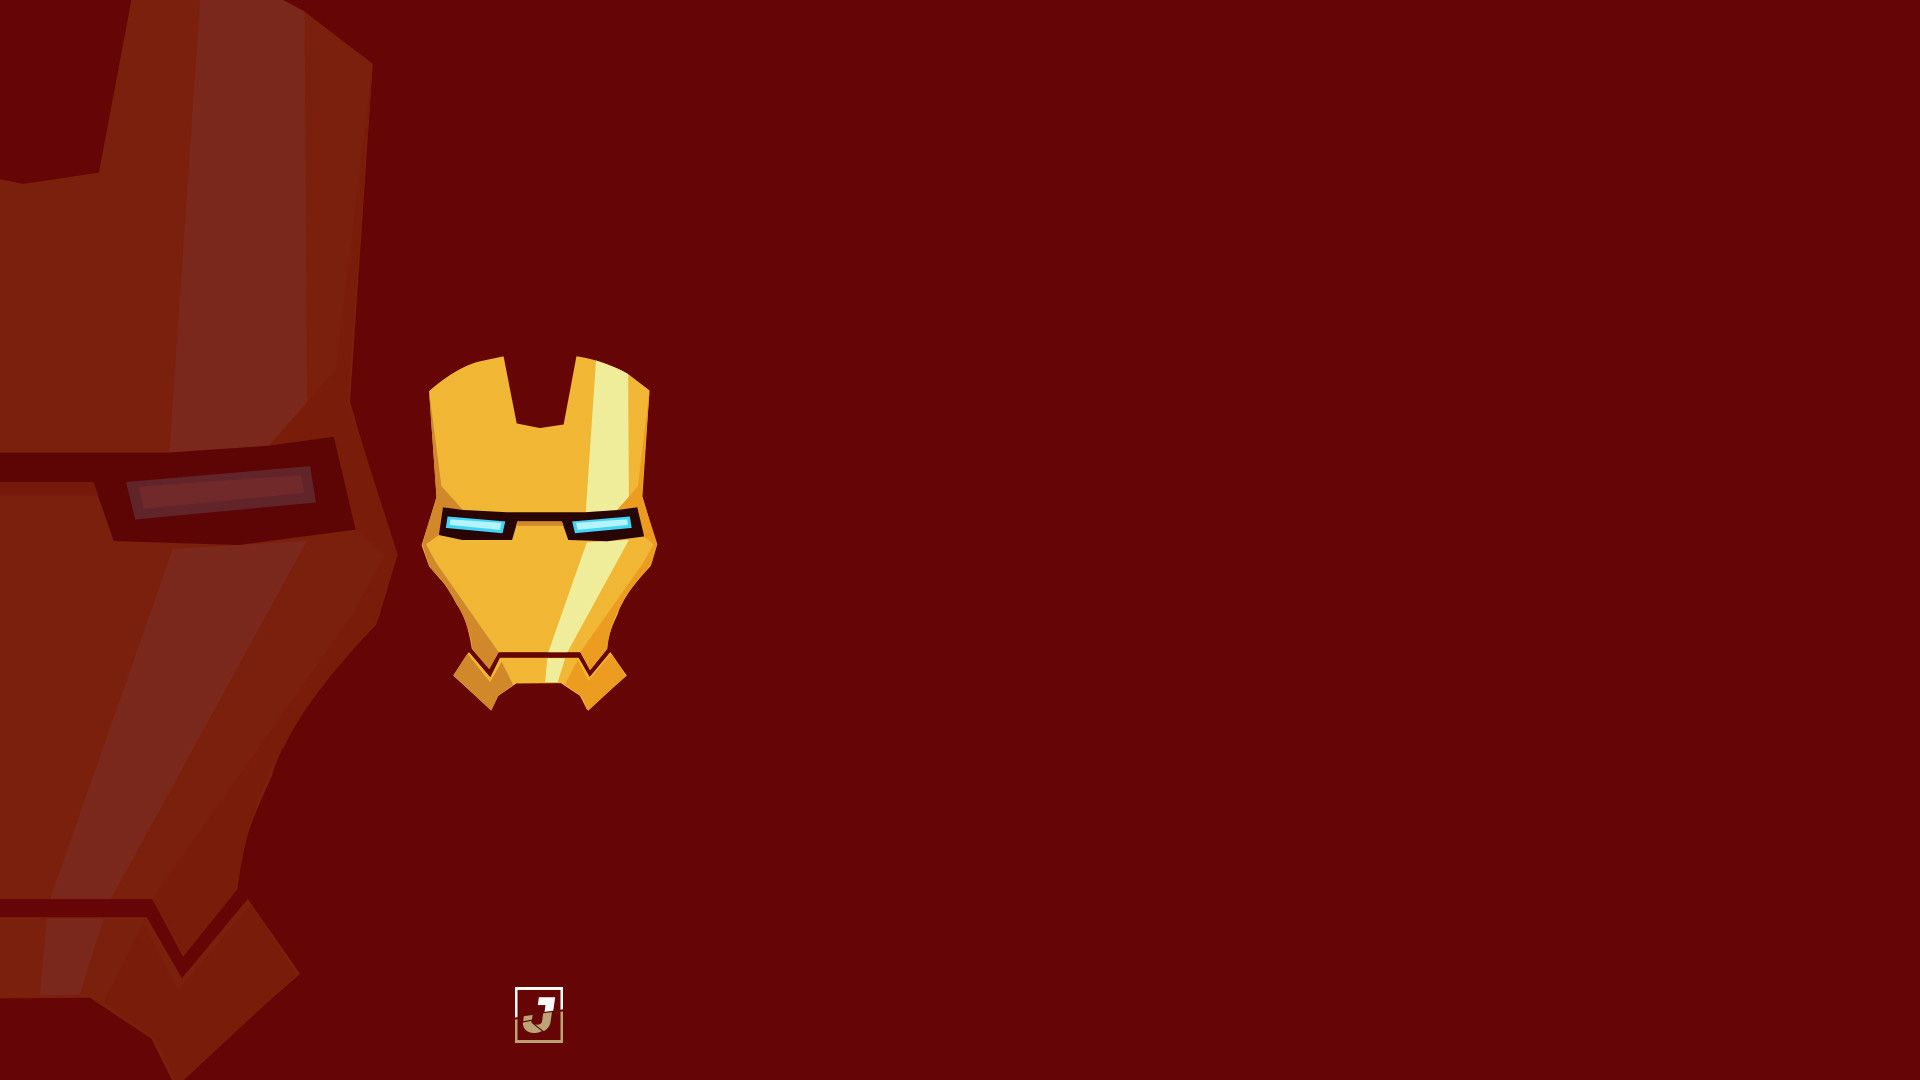 Iron Man Mask Minimalism, HD Superheroes, 4k Wallpaper, Image, Background, Photo and Picture